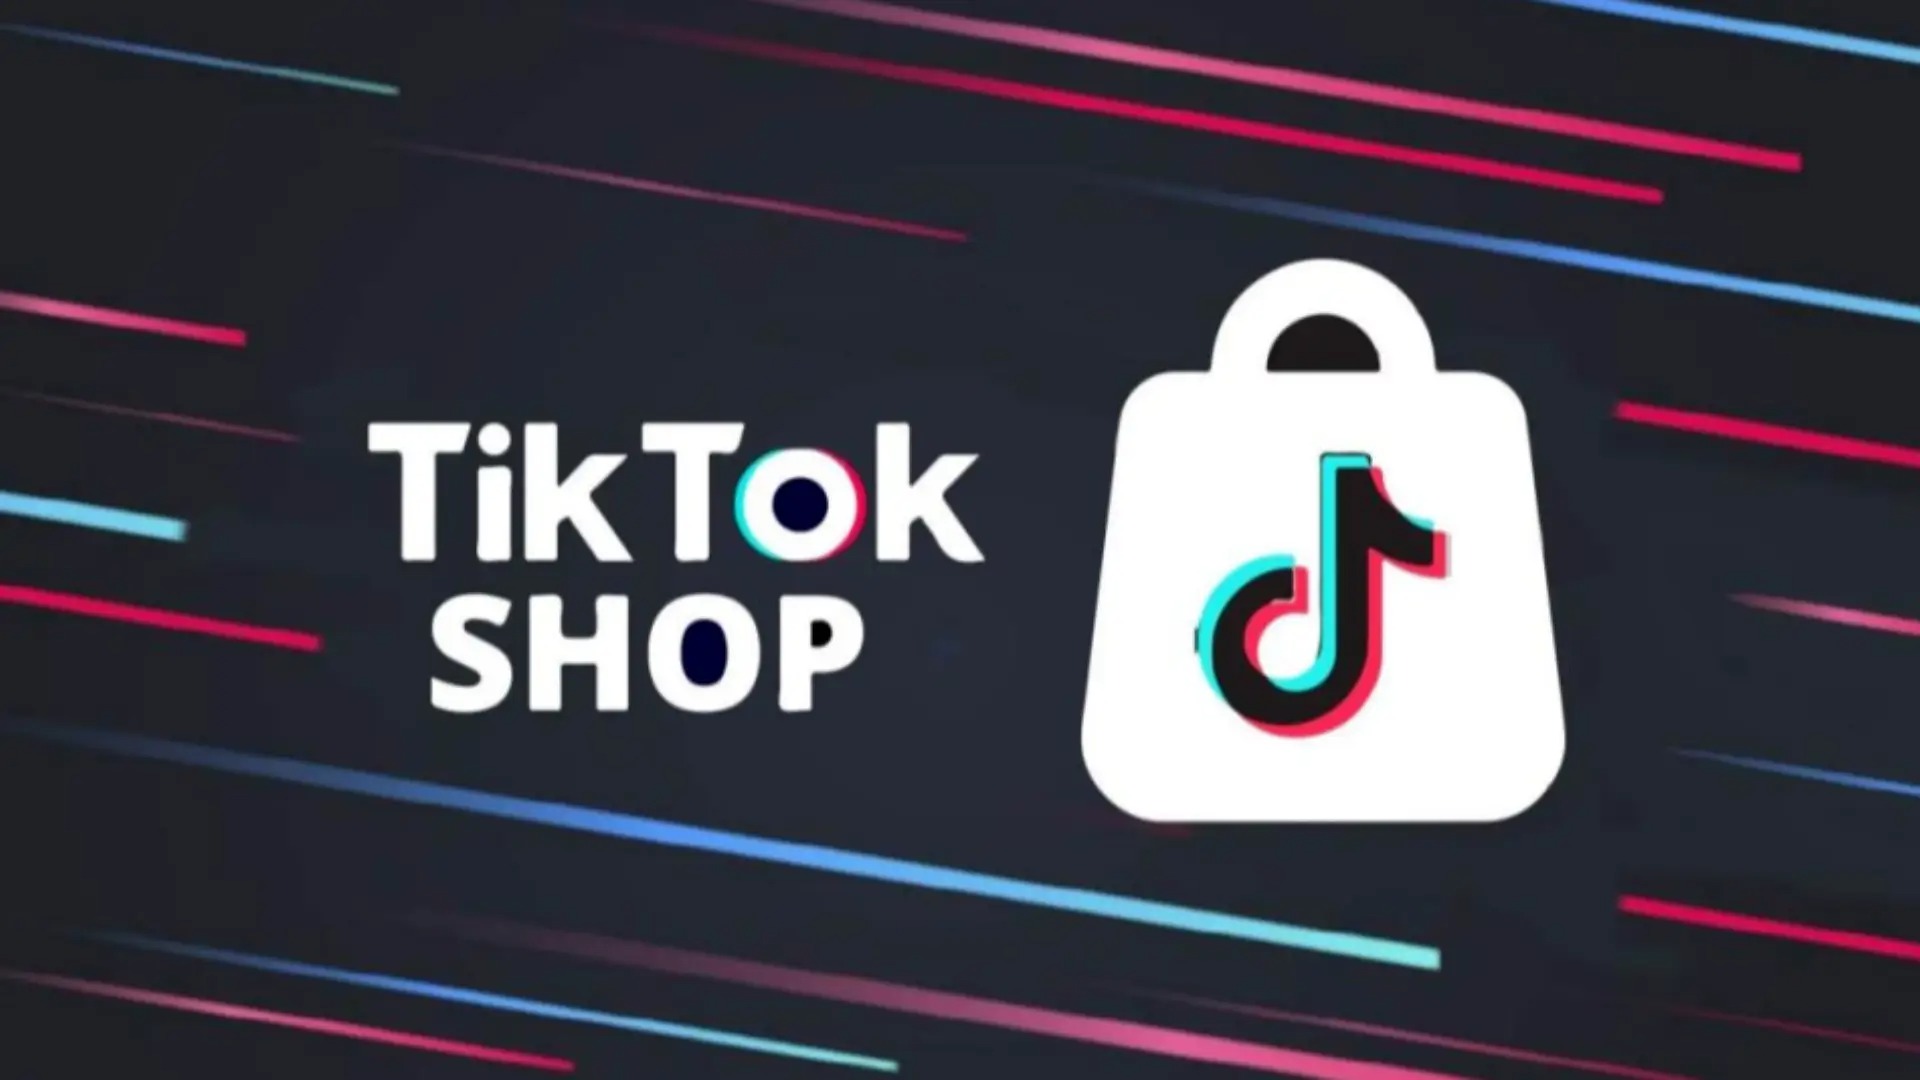 TikTok Shop测试图片搜索购物功能